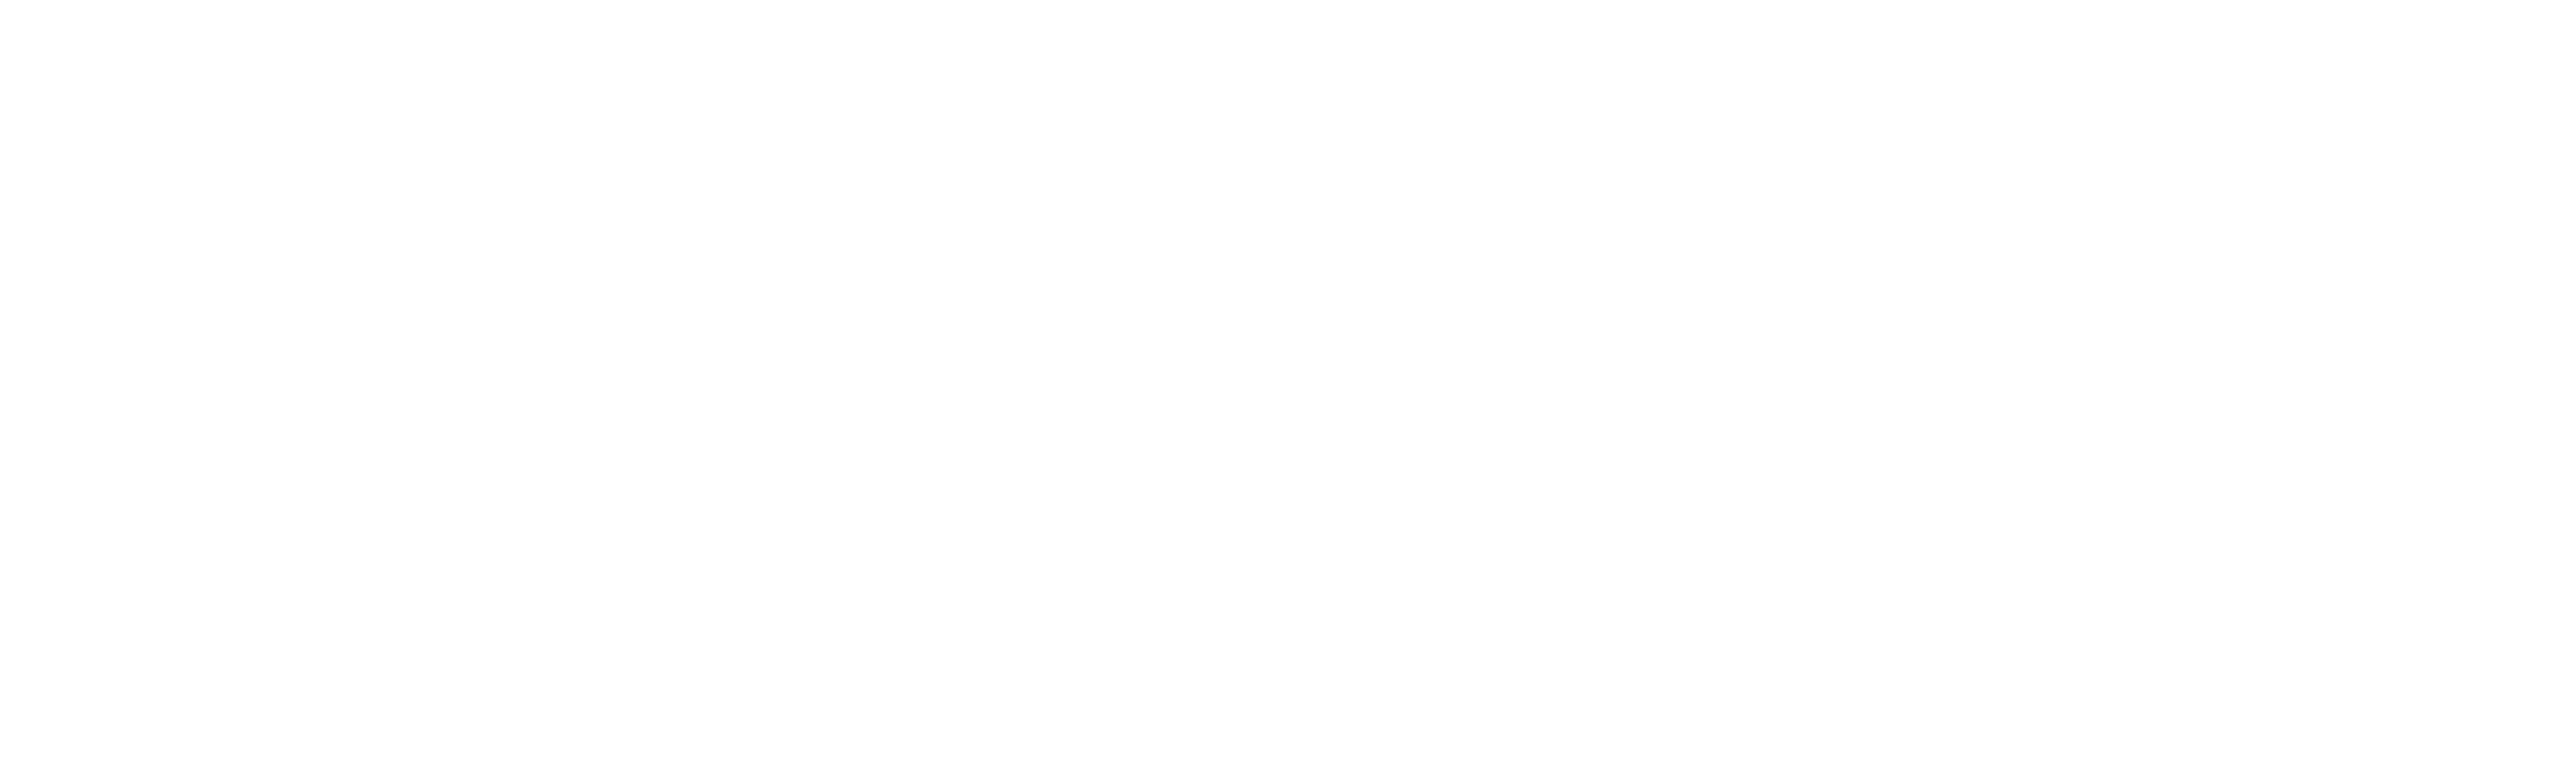 Neon Lights Canada